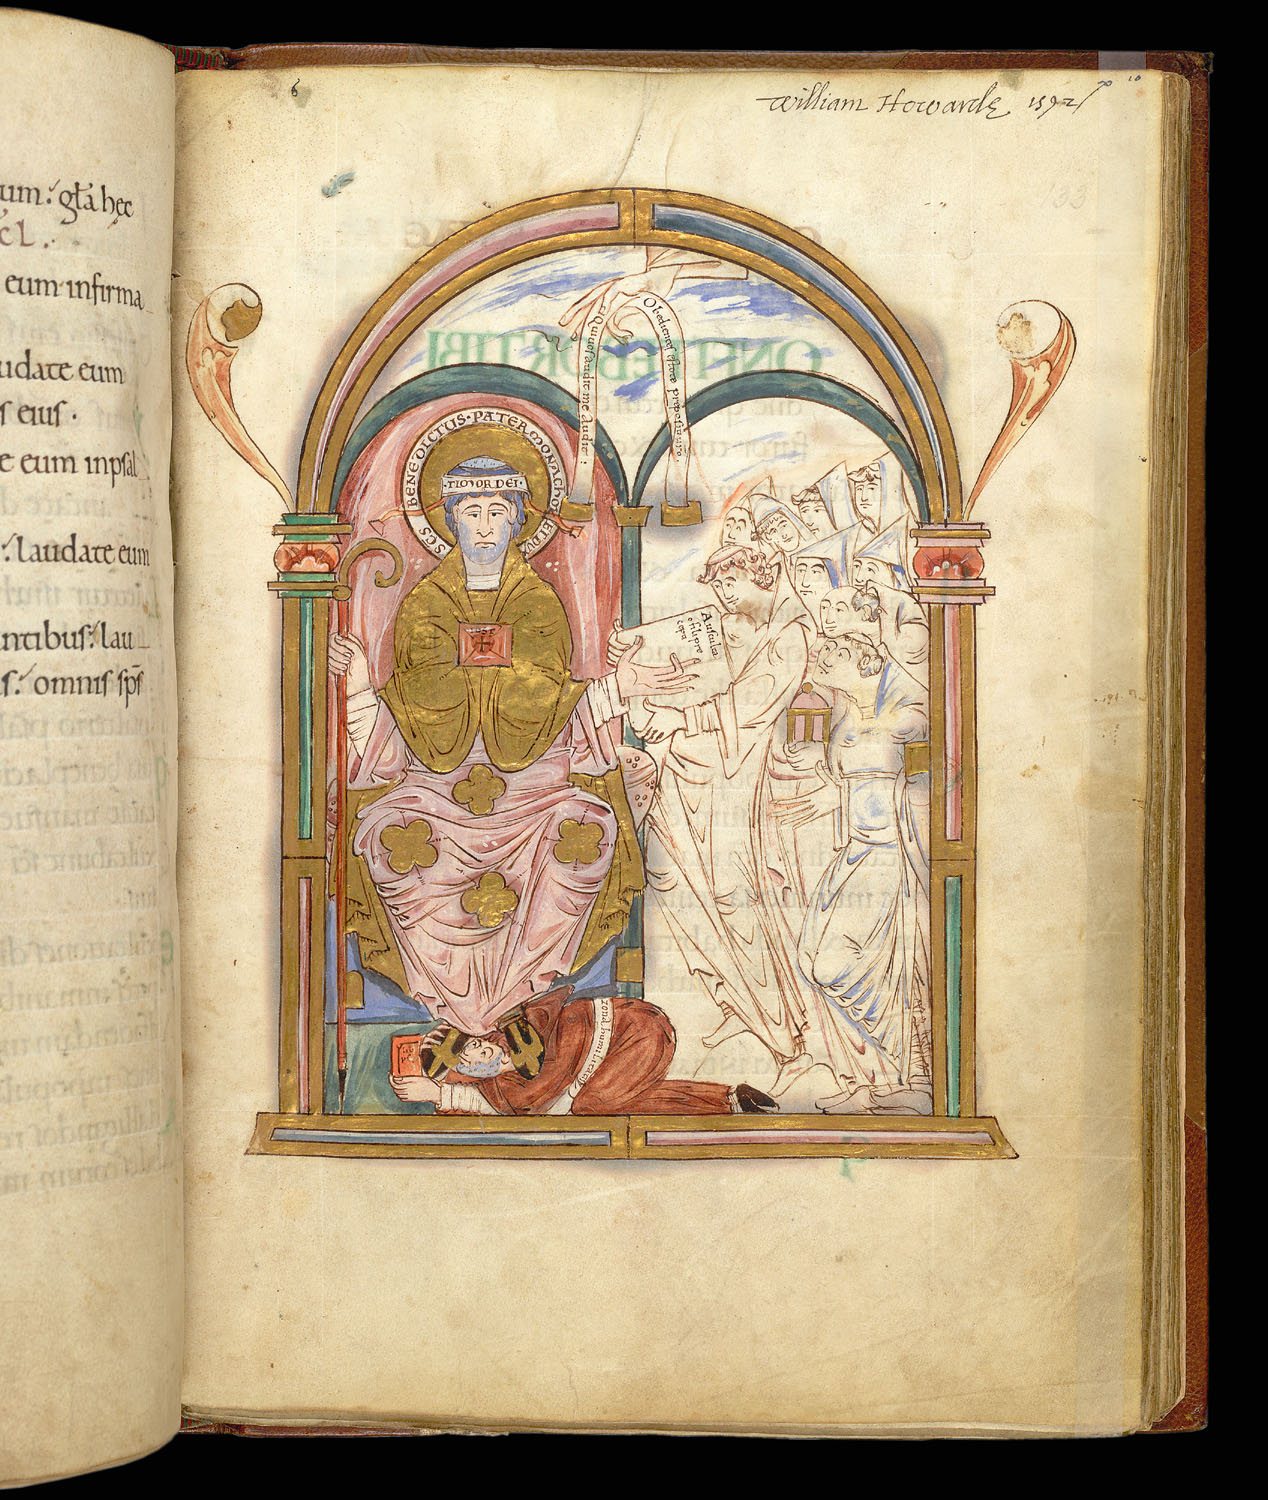 Eadui Basan, Image of Saint Benedict, Eadui Psalter, London, British Library MS Arundel 155, f. 133, England, between 1012 and 1023 CE. Image: CC0 1.0.